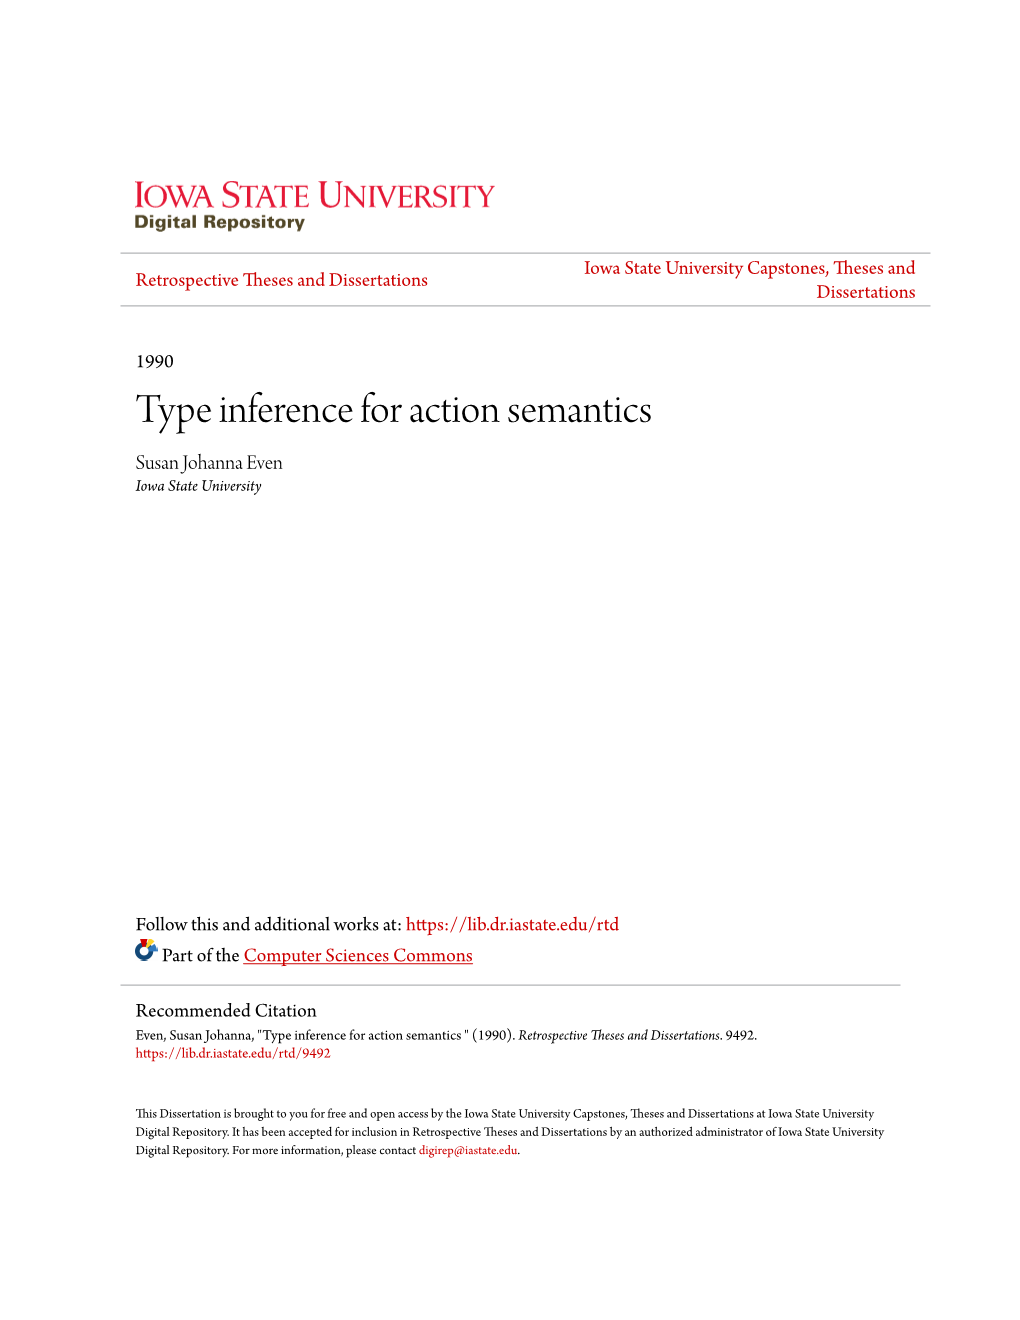 Type Inference for Action Semantics Susan Johanna Even Iowa State University